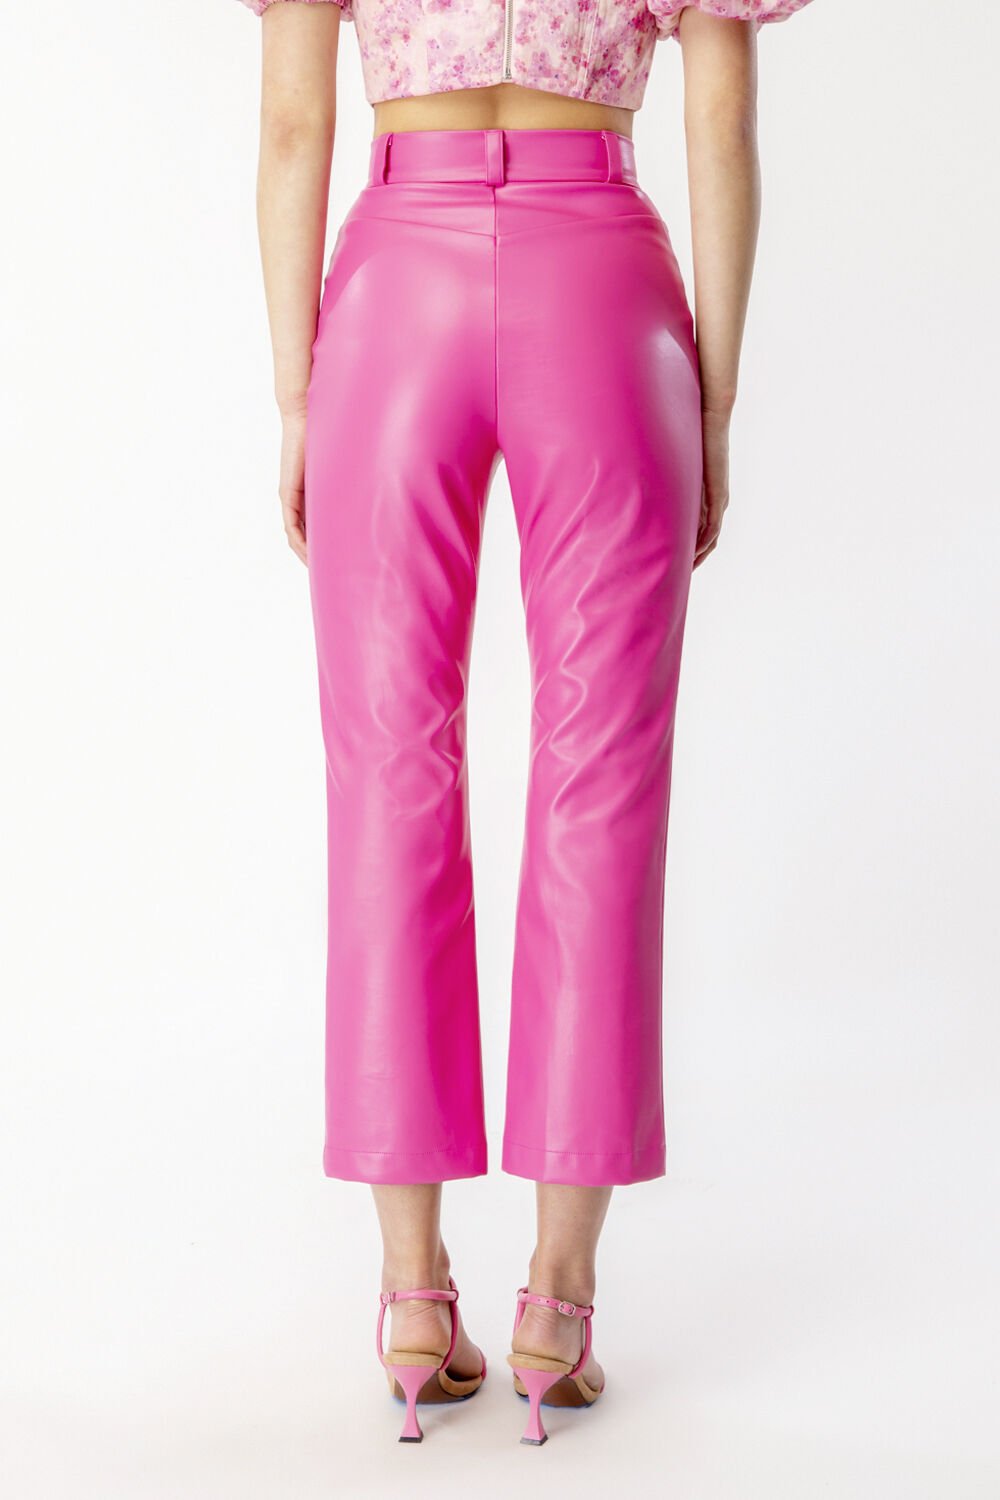 Dilyene Pants  Mid Waist Straight Leg Faux Leather Pants in Hot Pink   Showpo